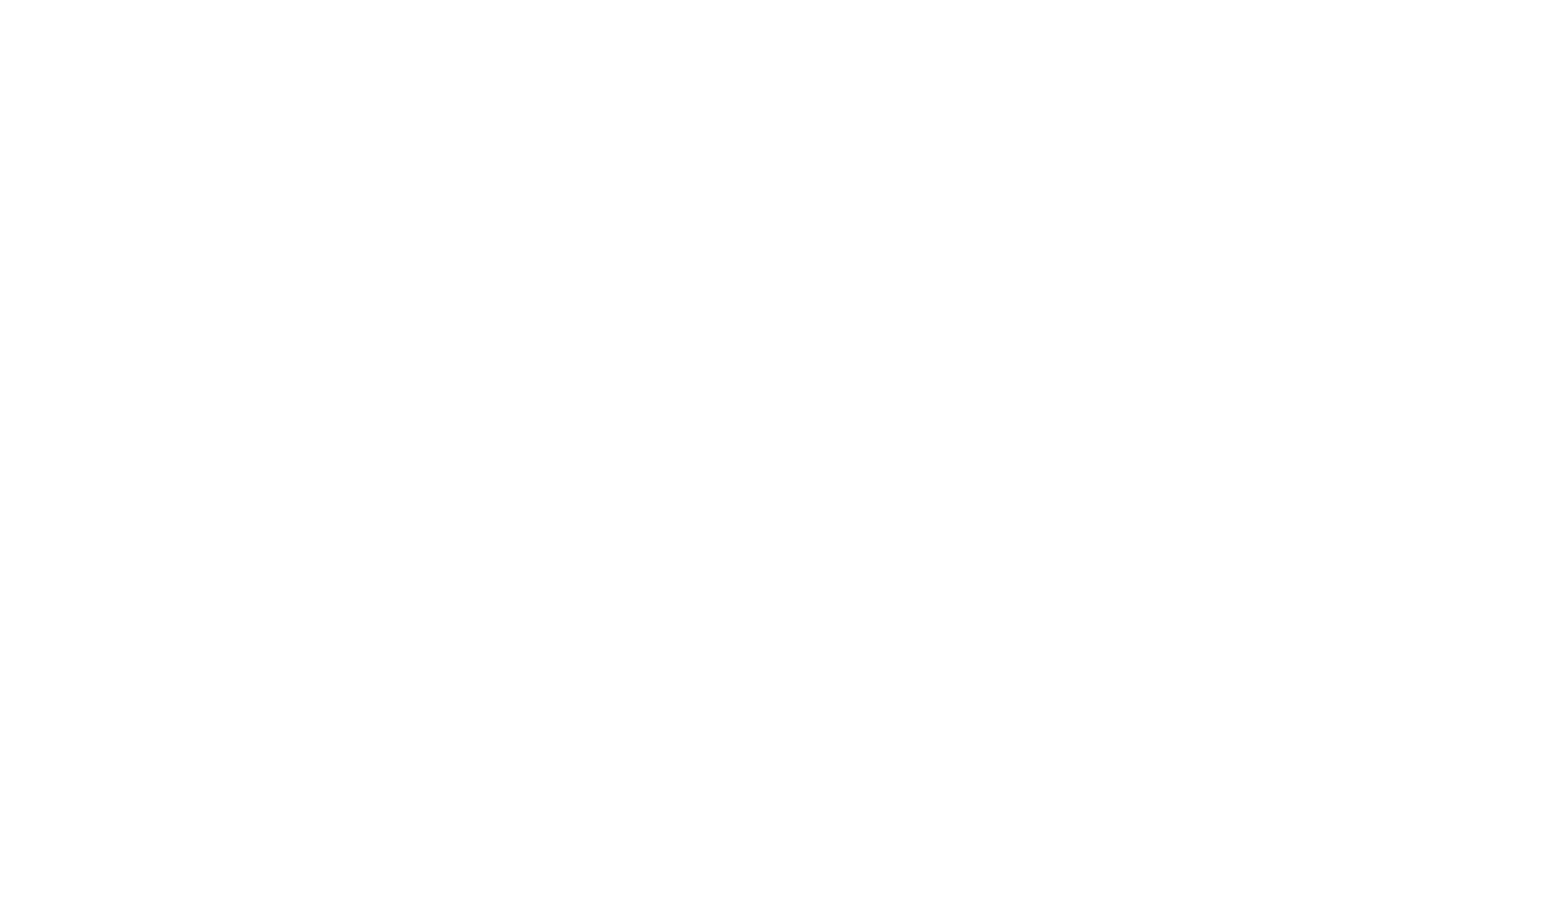 Compagnie Financière Richemont logo for dark backgrounds (transparent PNG)